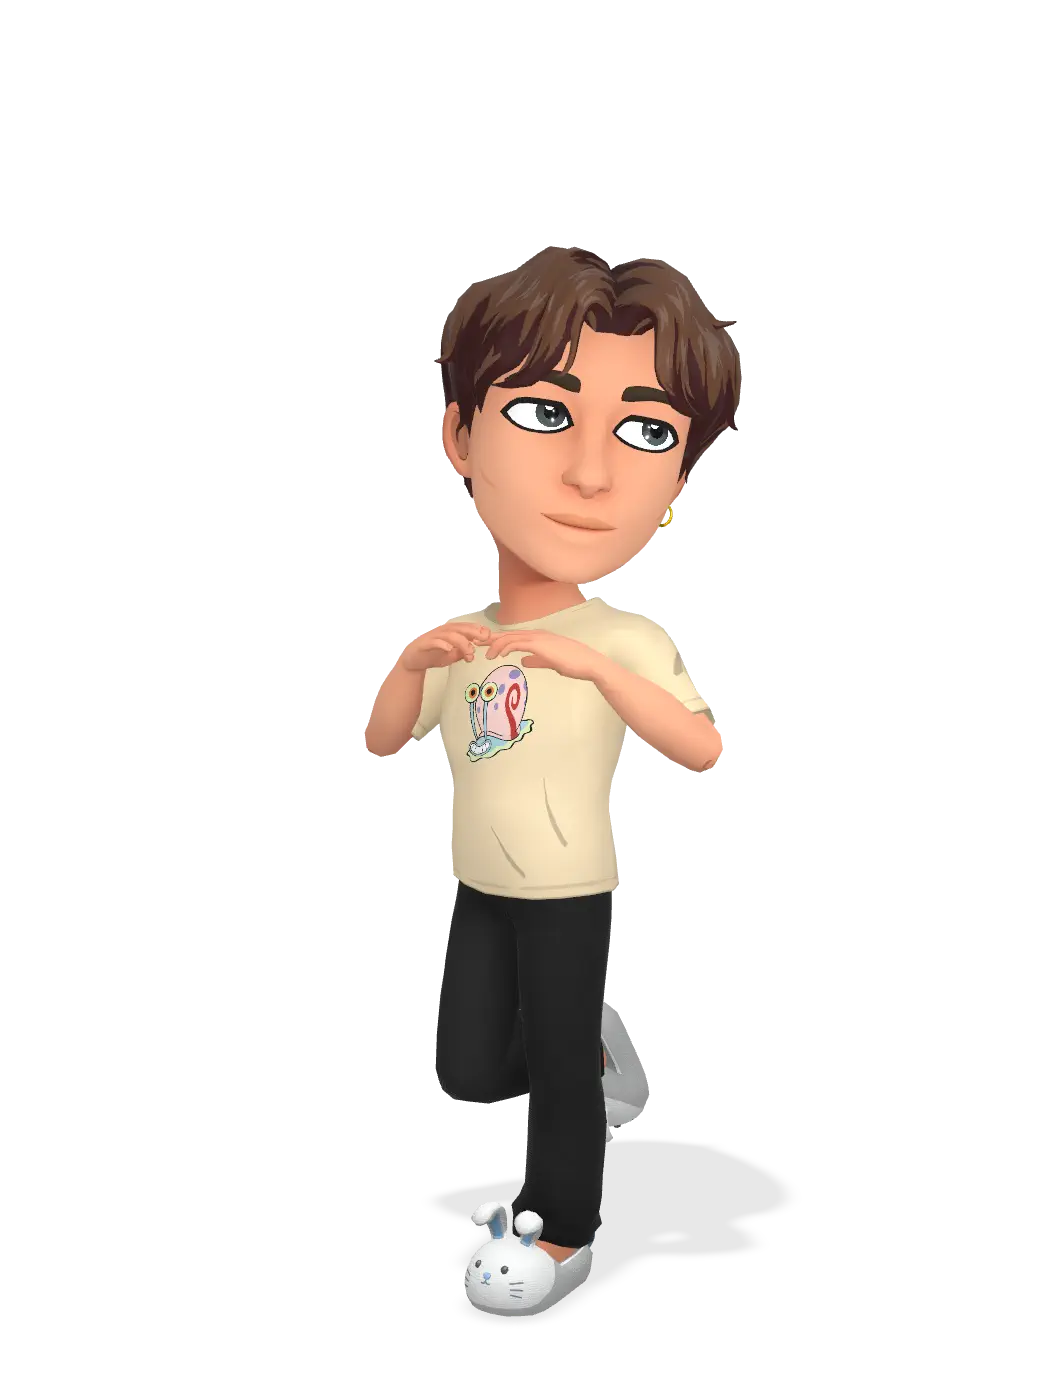 3D Bitmoji for brvge avatar